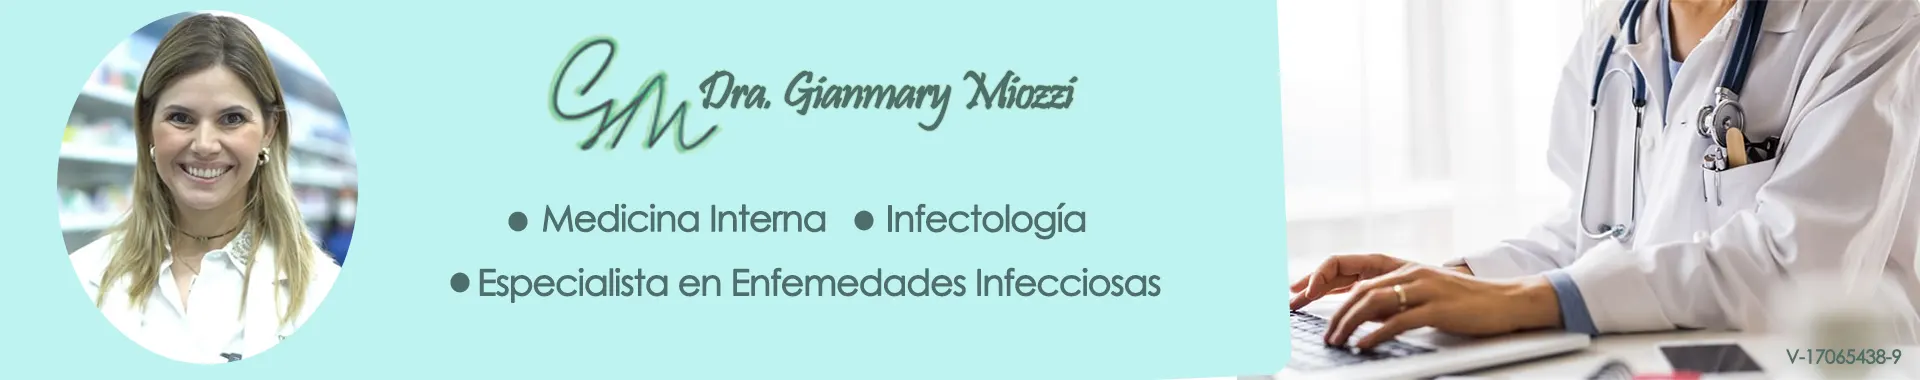 Imagen 1 del perfil de Dra. Gianmary Miozzi